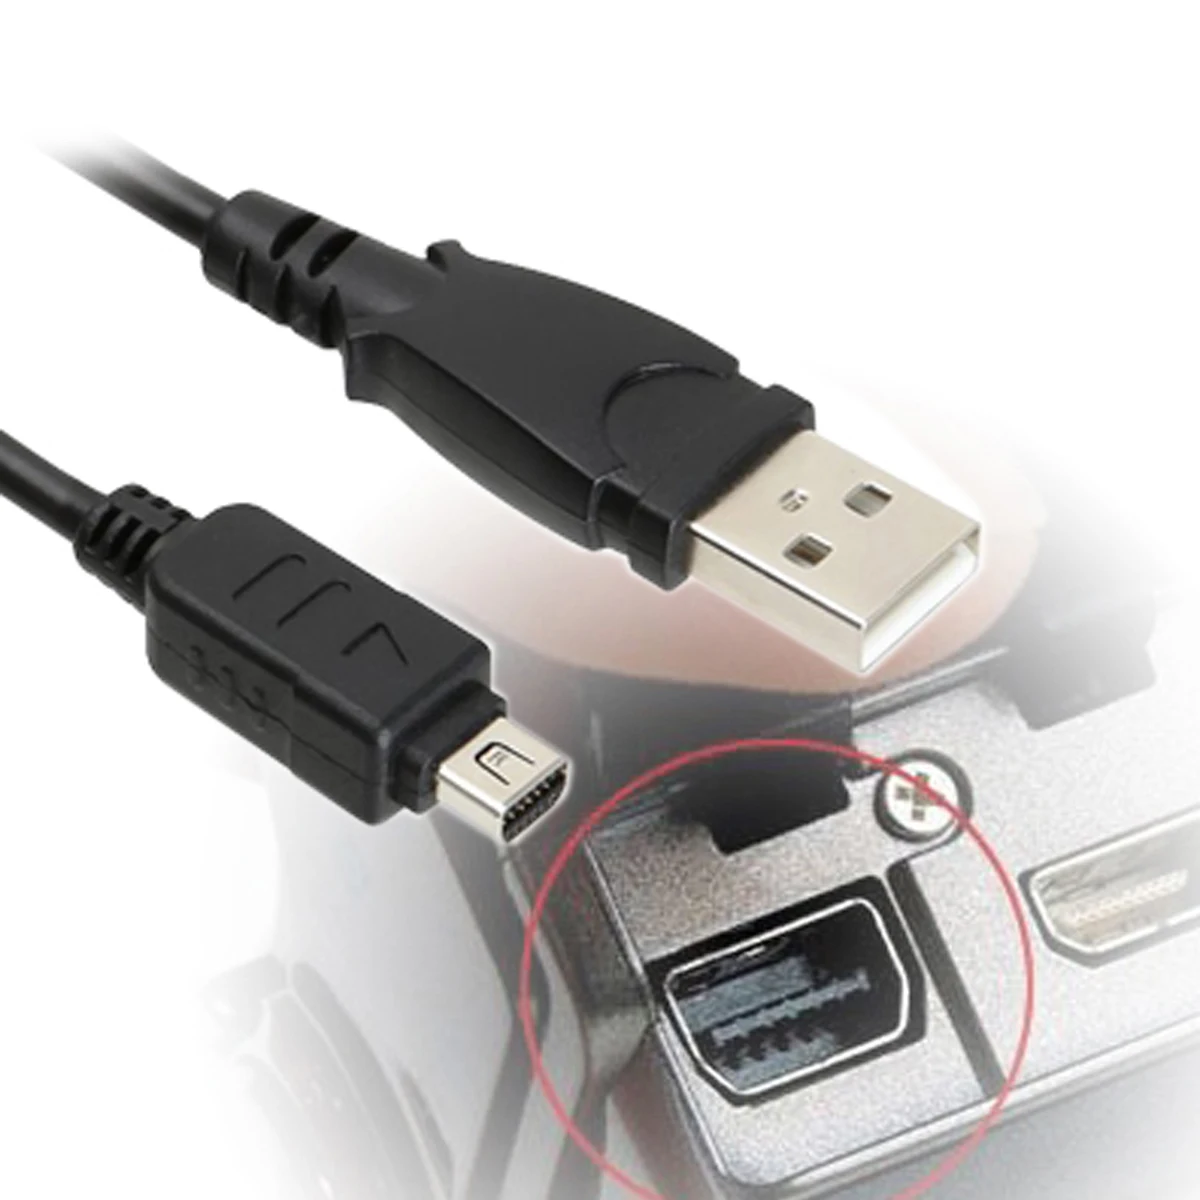 CB-USB5 CB-USB6 12Pin Macchina Fotografica del USB di Dati del Cavo del cavo Per Olympus SZ-10 SZ-11 SZ-14 SZ-20 SZ-31MR OM-D E-M5 TG-1 U410 U500 U600 U700